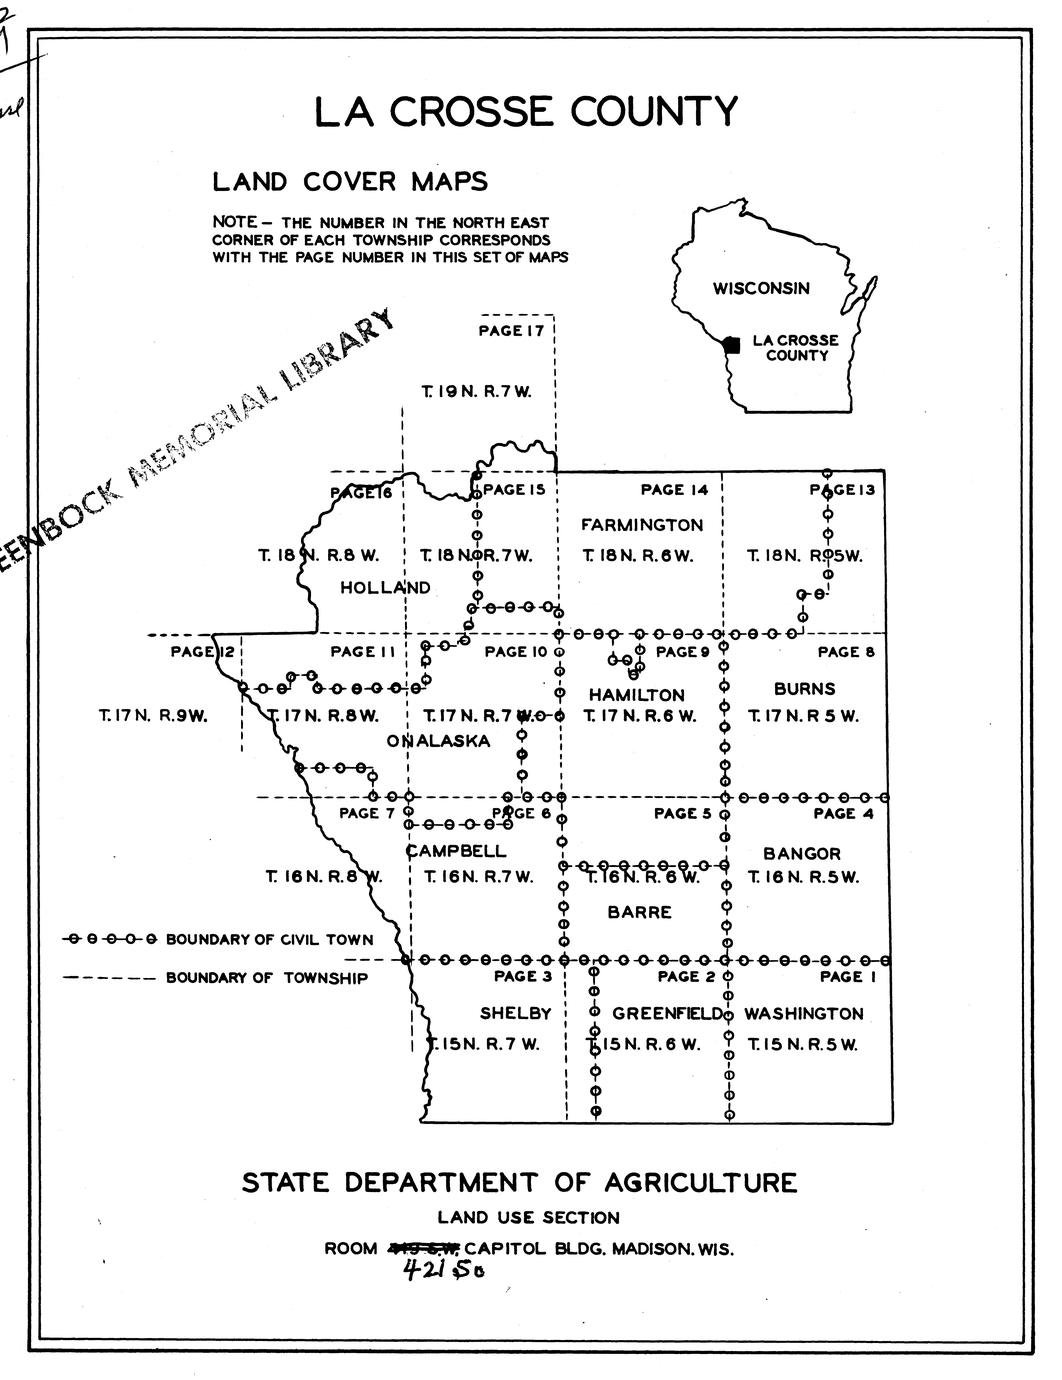 La Crosse County land cover maps